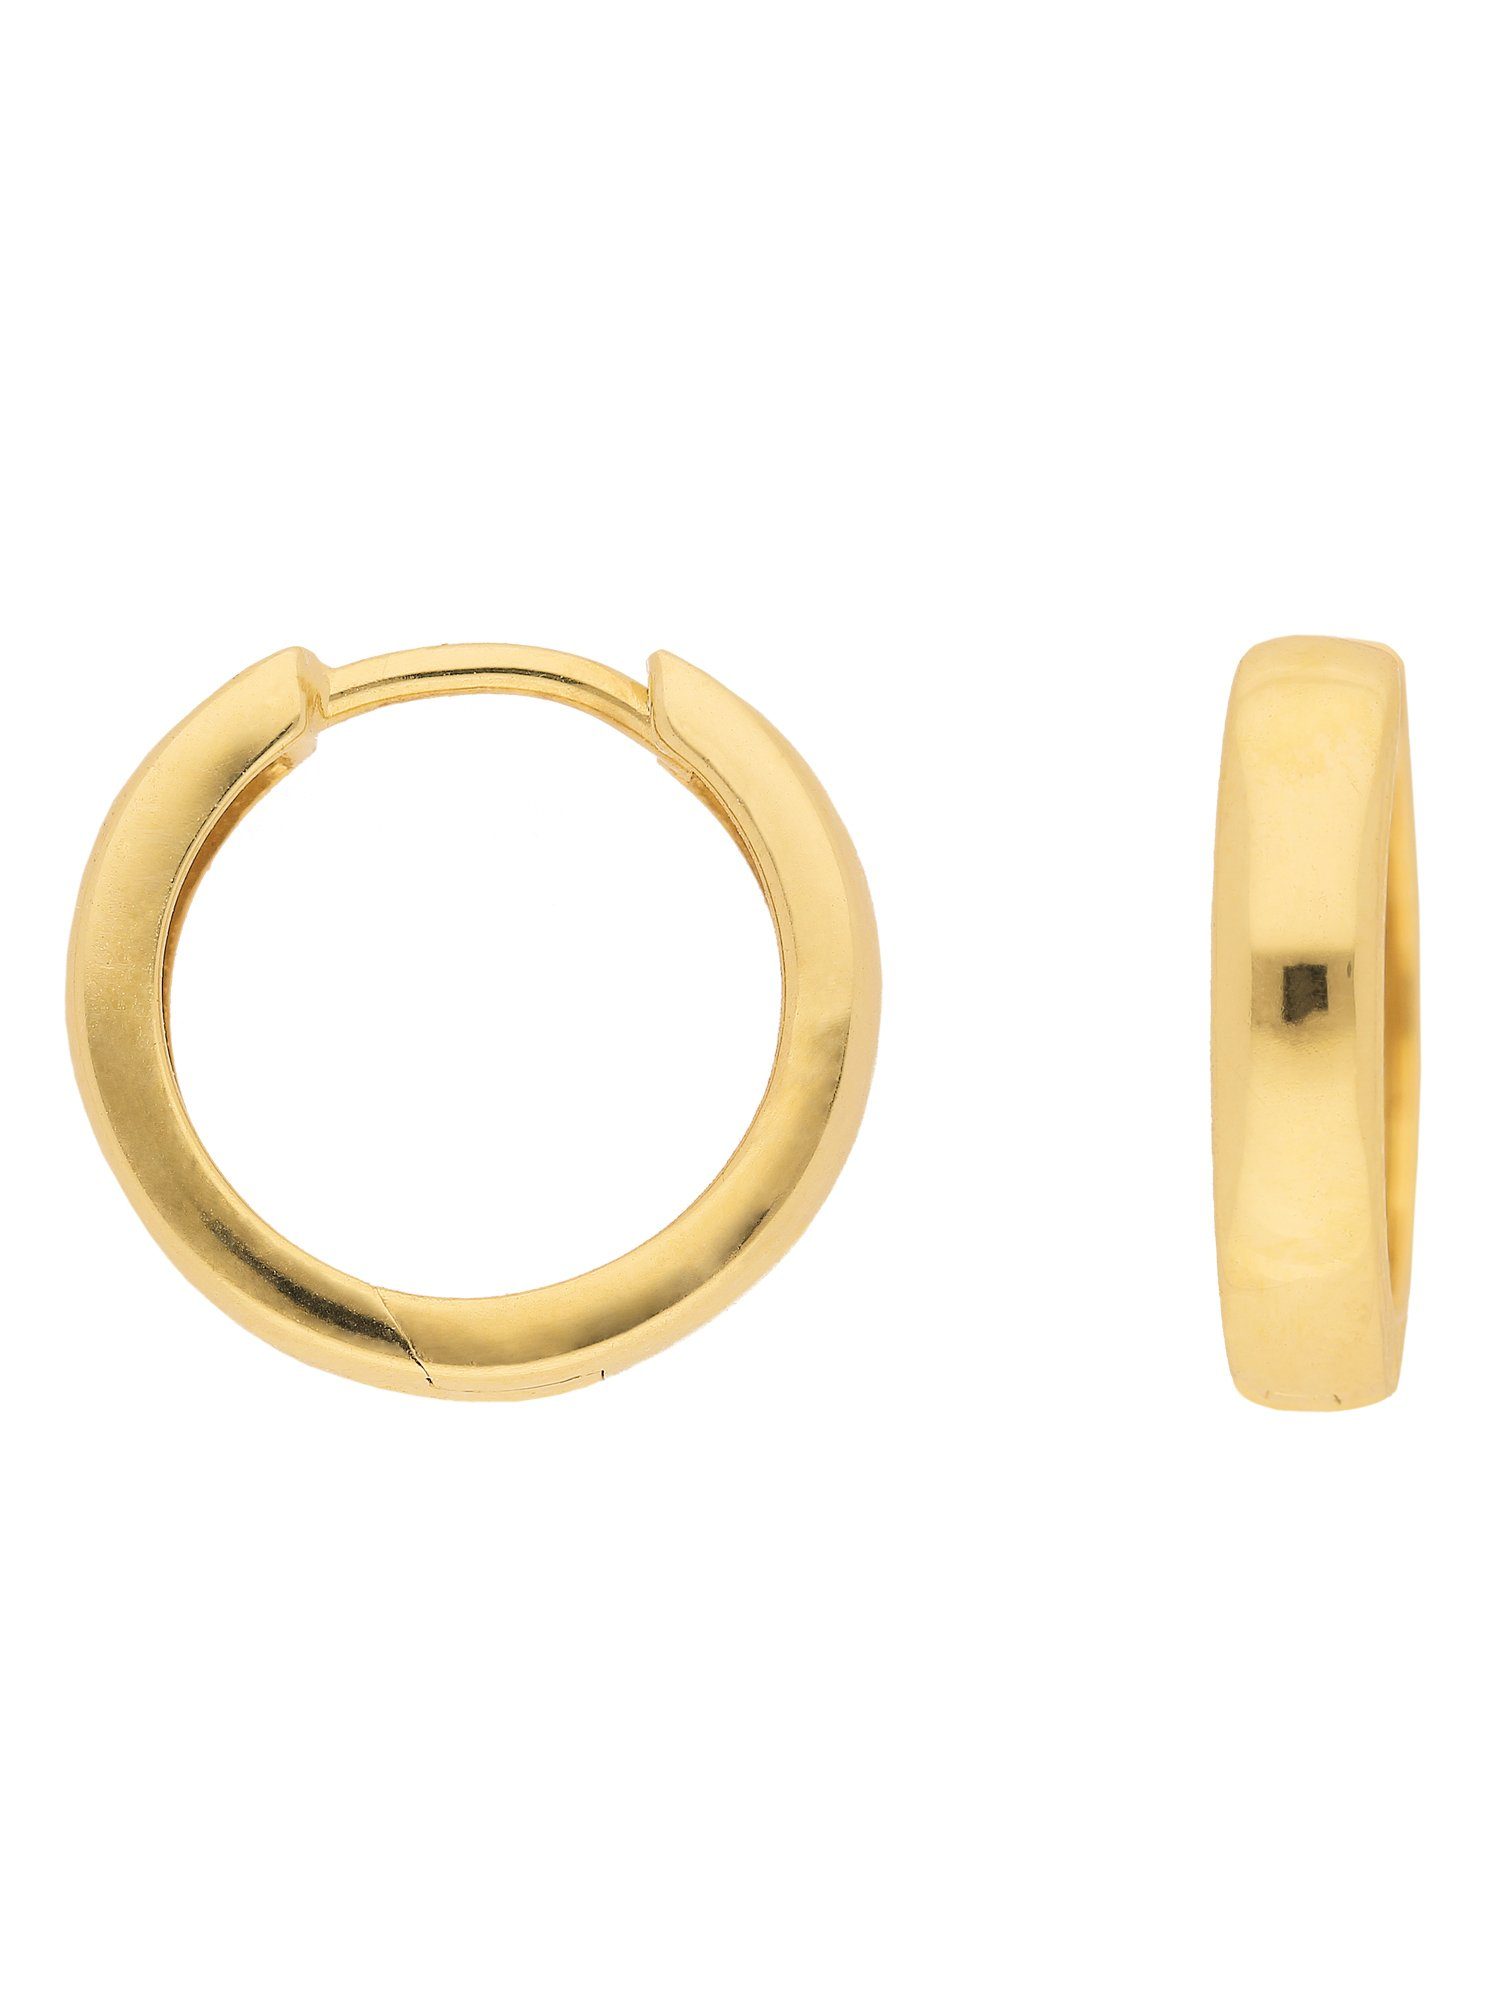 Adelia´s Paar Ohrhänger 585 Gold Ohrringe Creolen Ø 15 mm, Goldschmuck für Damen